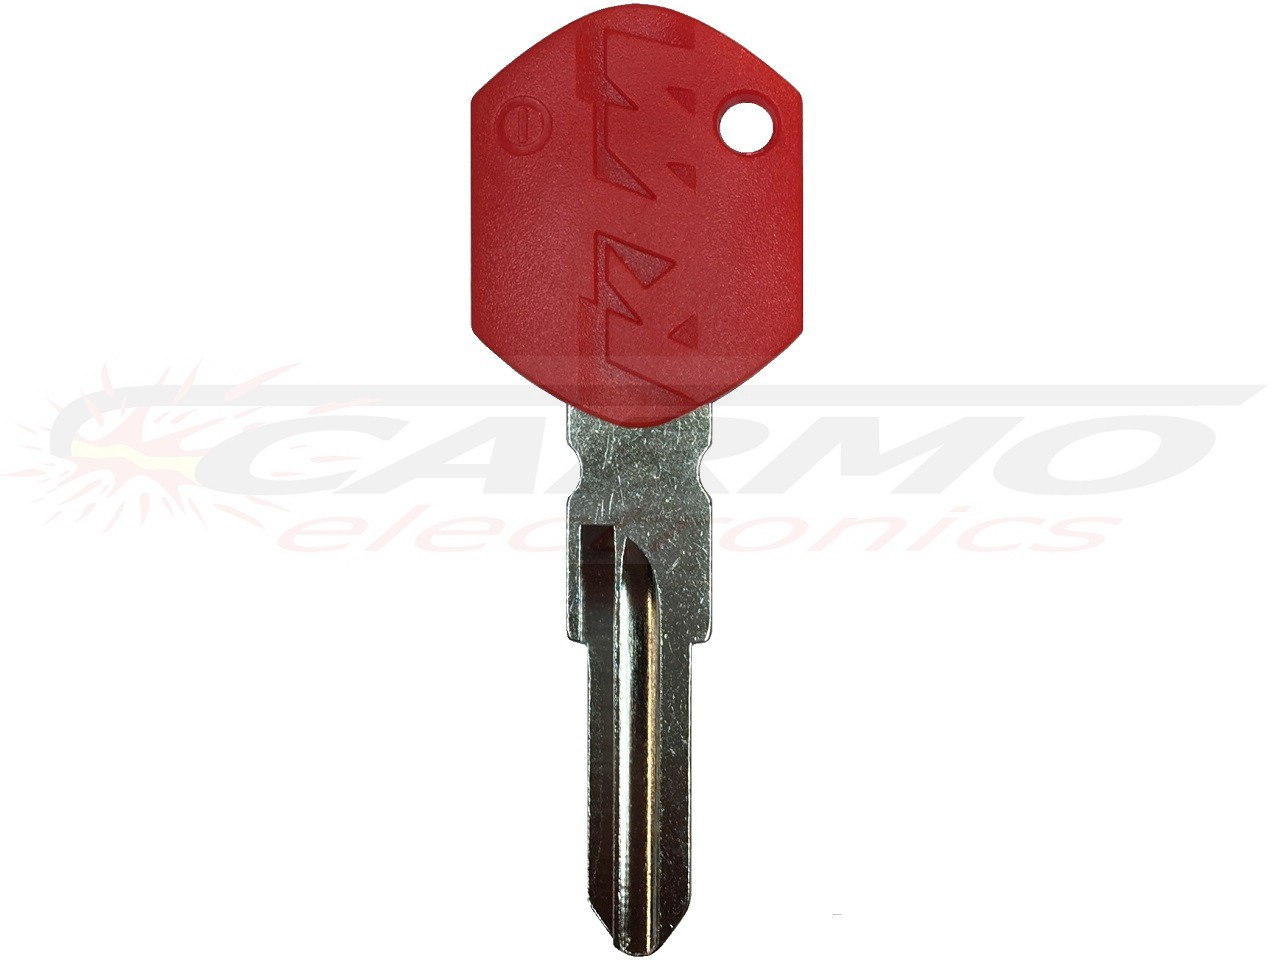 KTM red chip key - Haga click en la imagen para cerrar